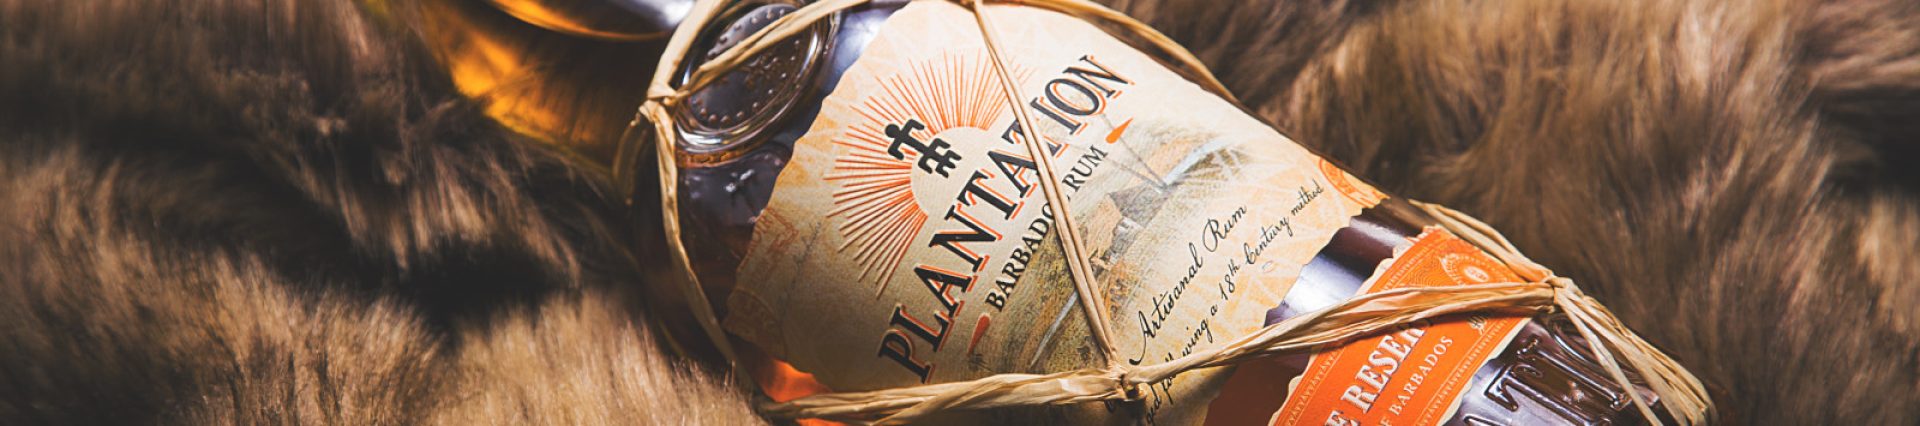 Understanding the Magnificent 7 Types of Rum.